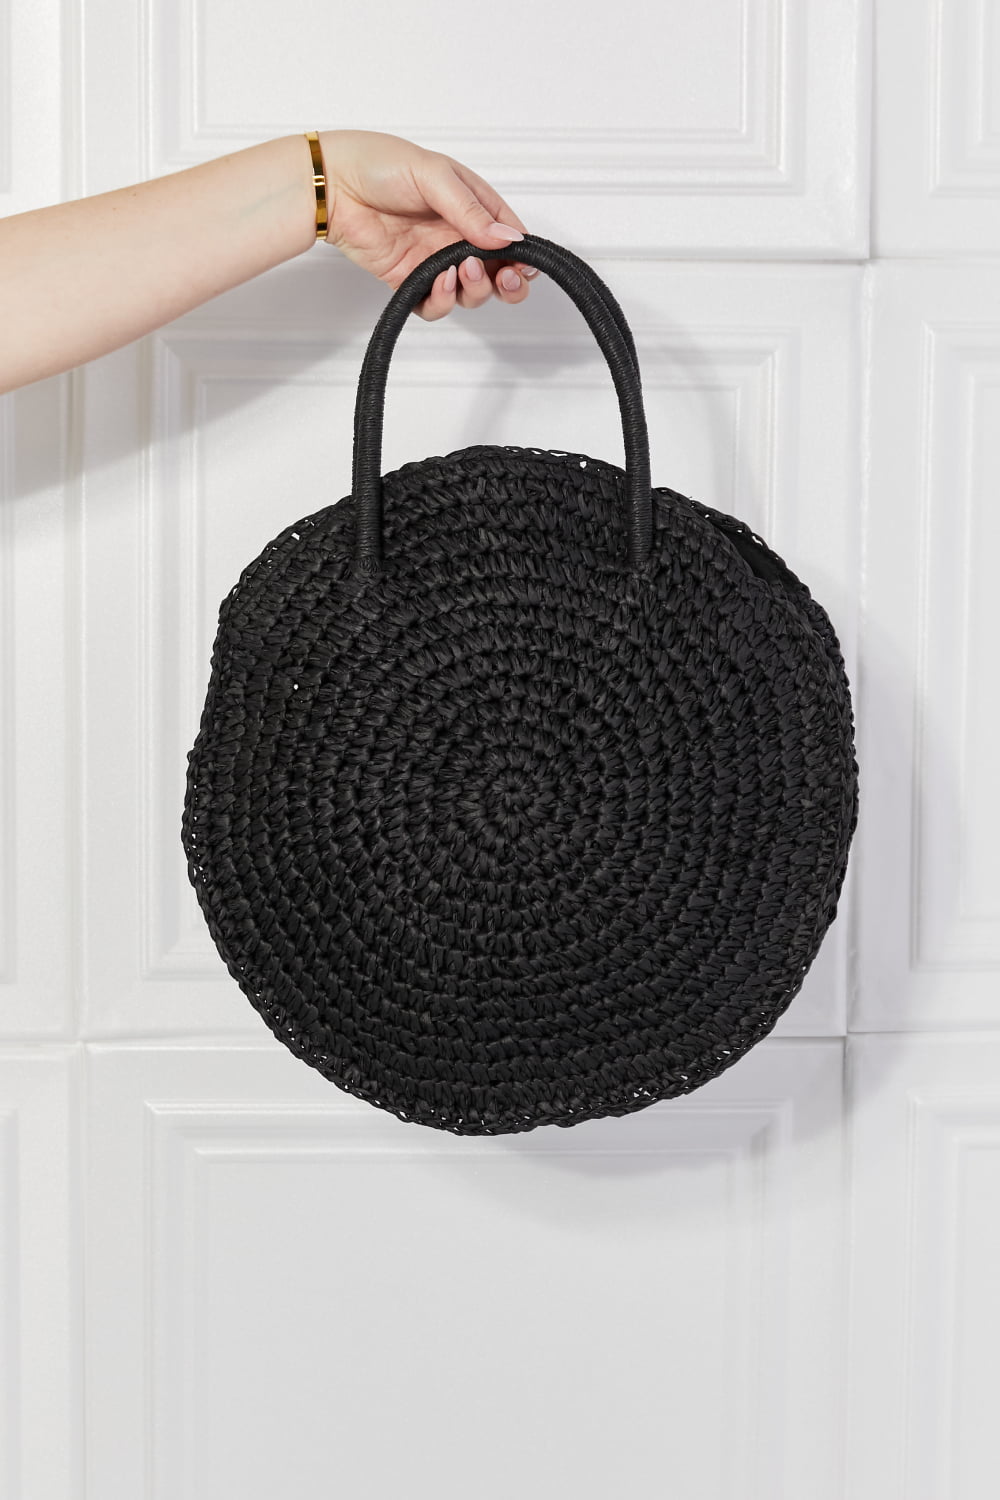 Justin Taylor Beach Date Straw Rattan Handbag in Black - pvmark